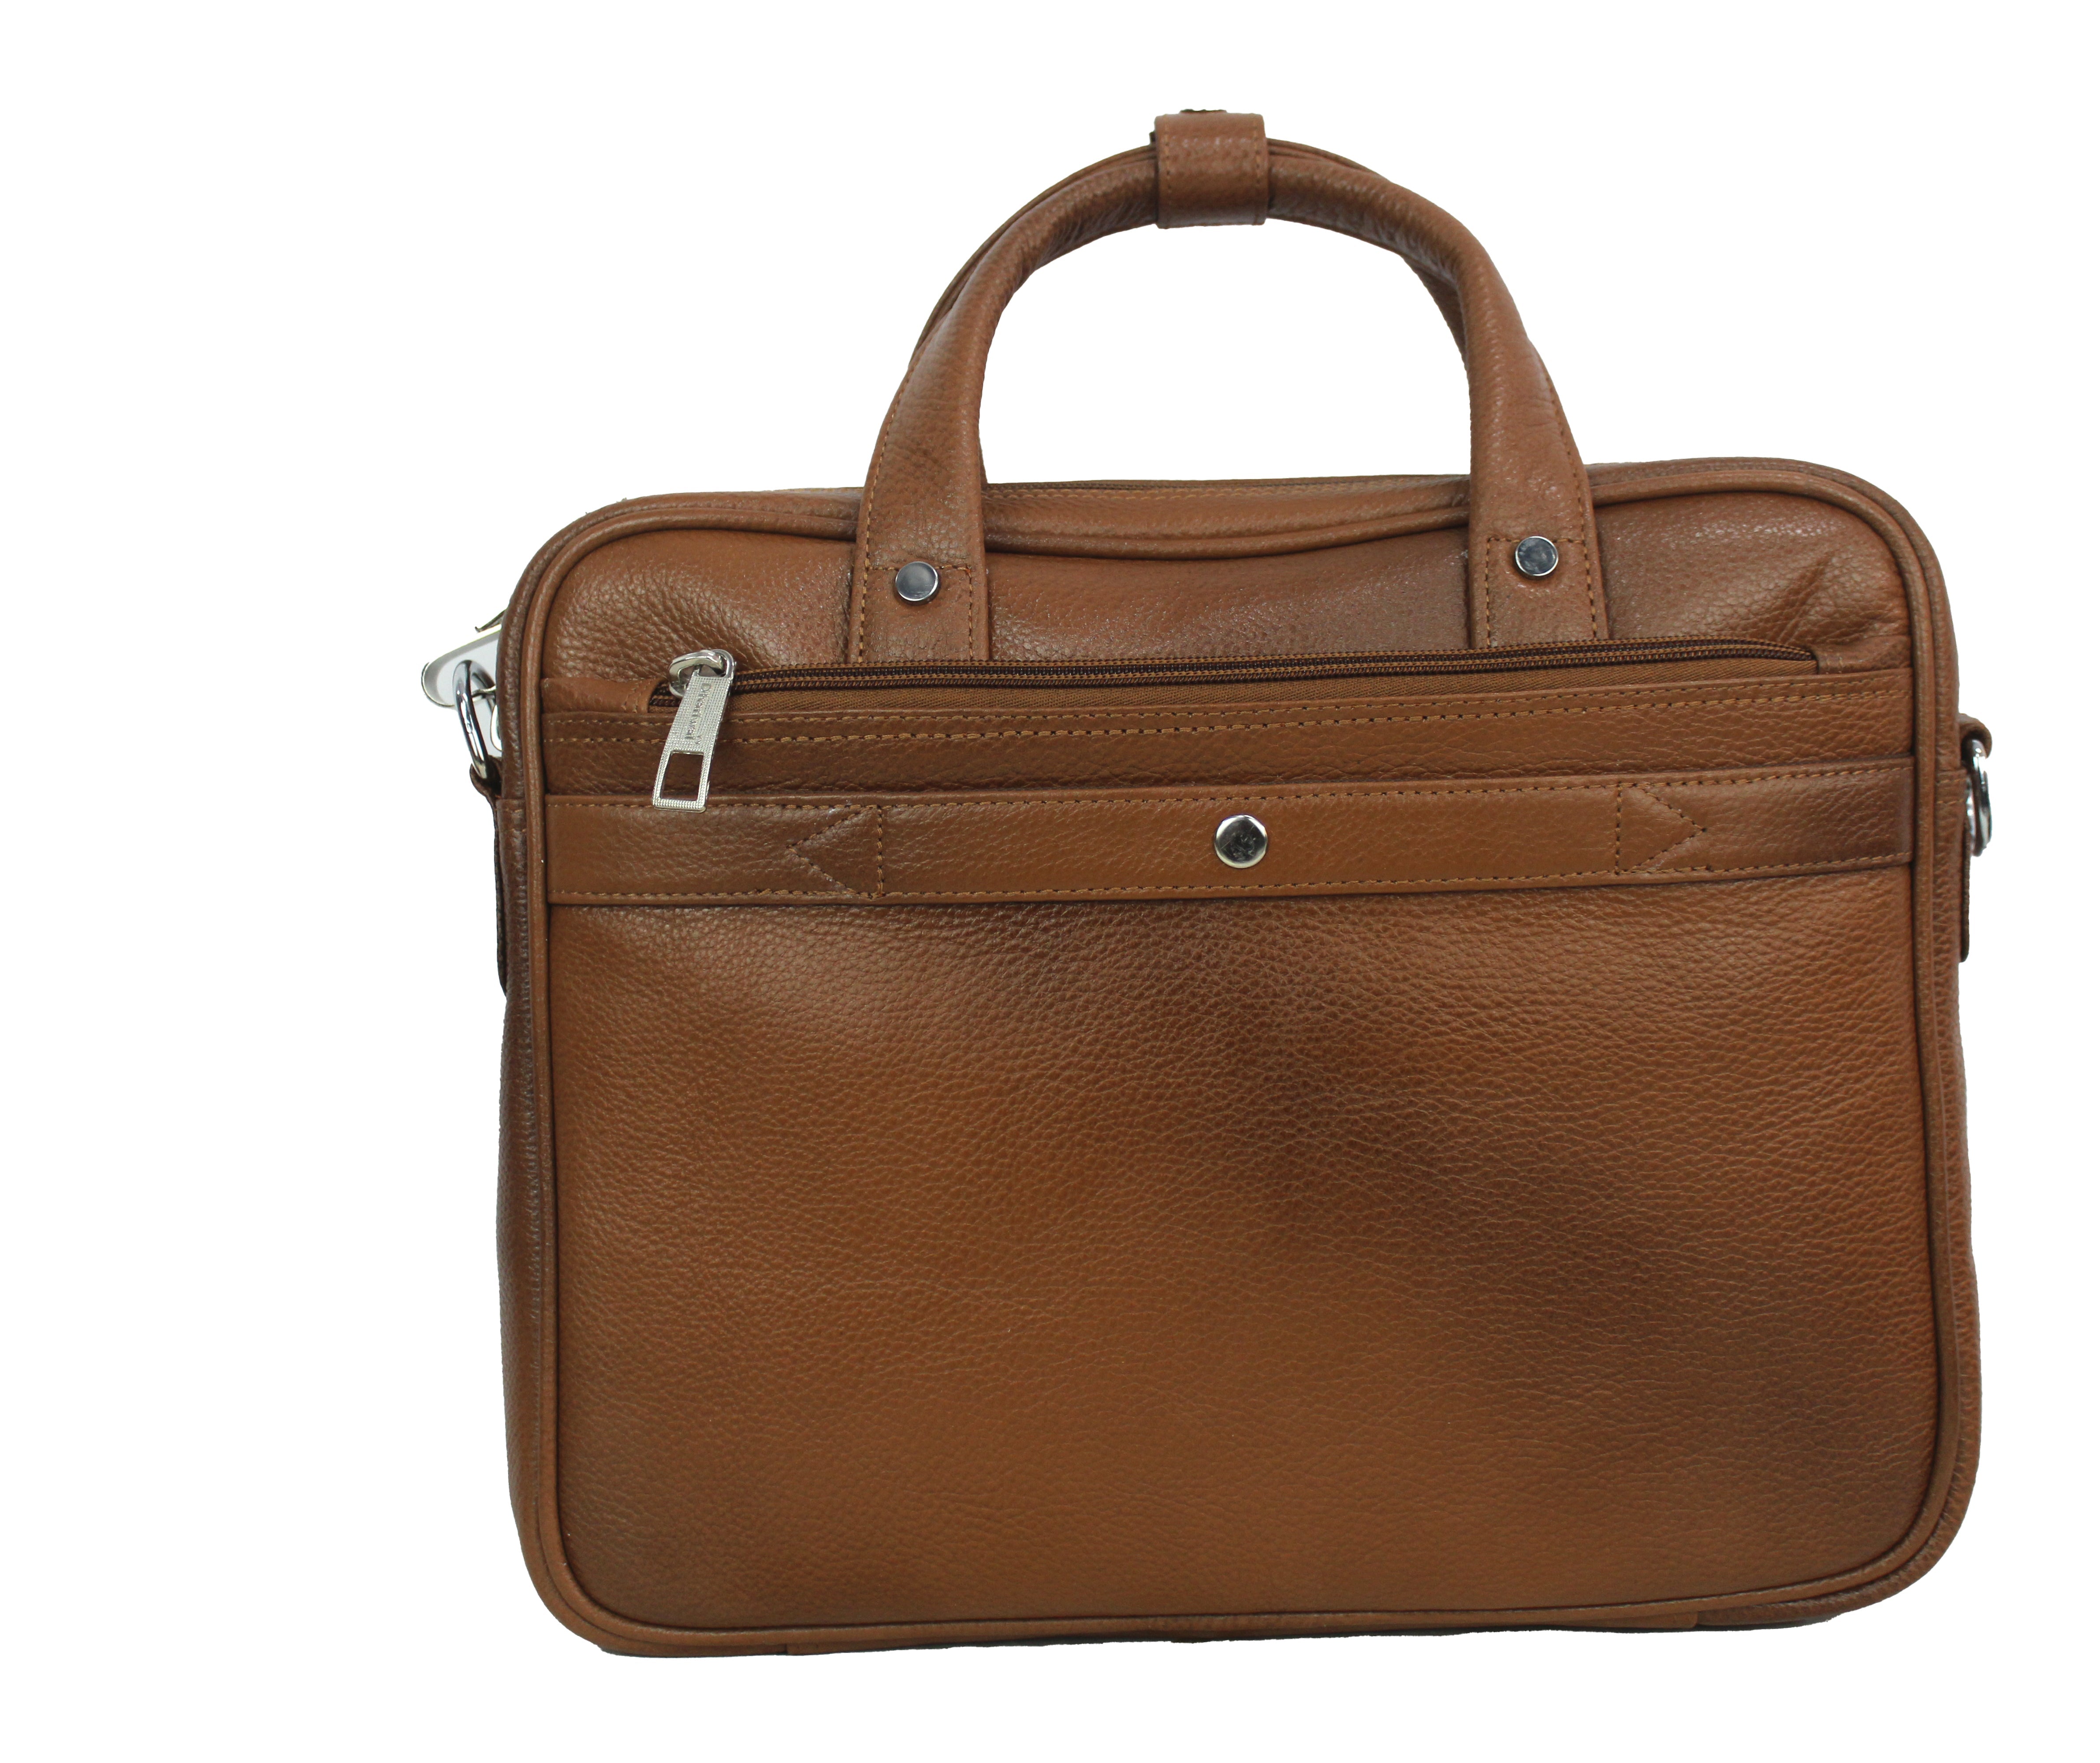 University Executive Leather Briefcase #2499 - Jack Georges